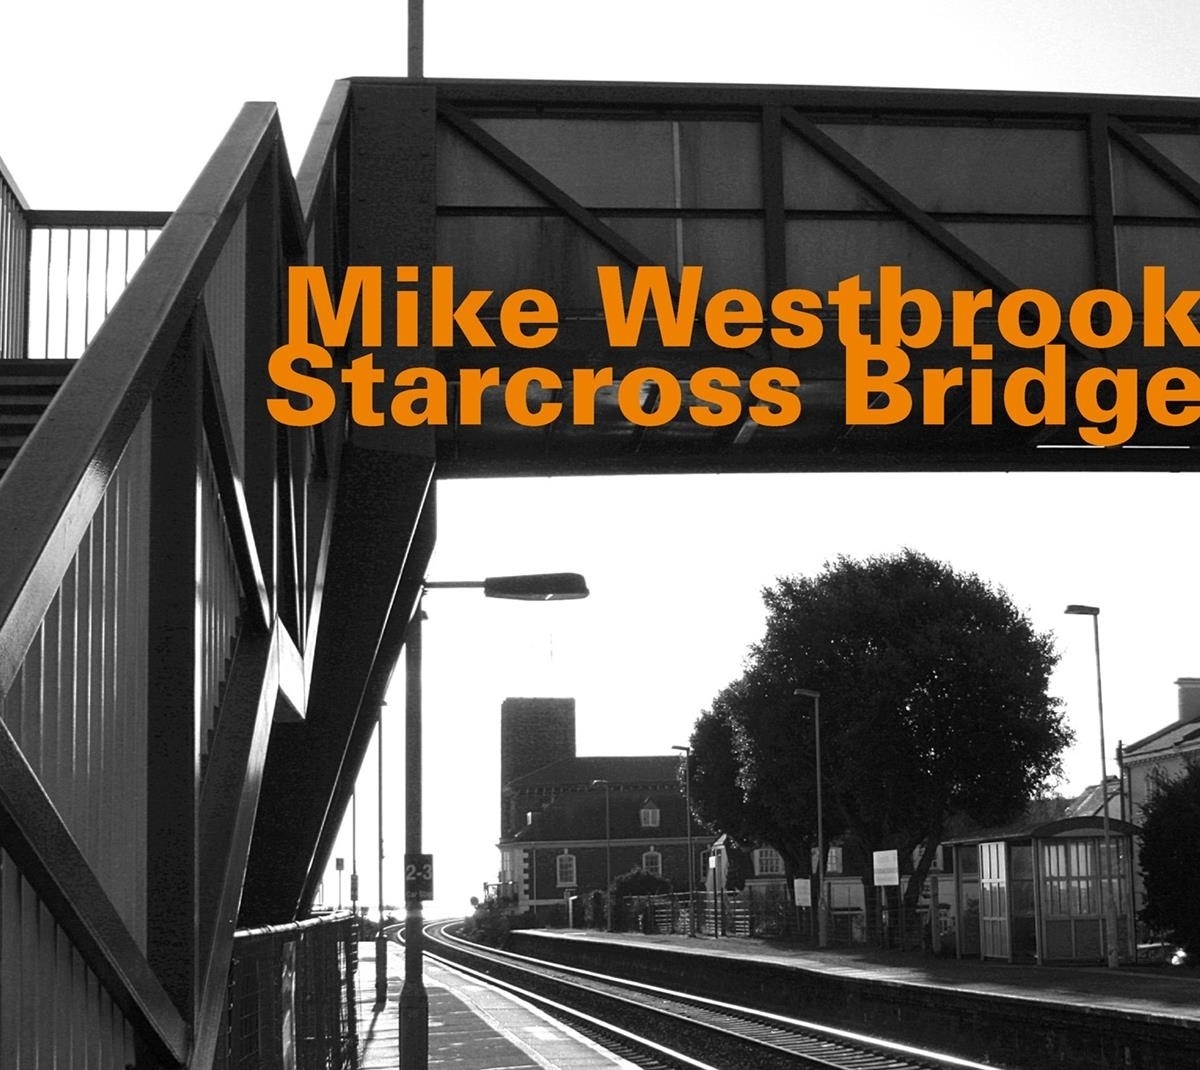 Starcross Bridge - Mike Westbrook. (CD)